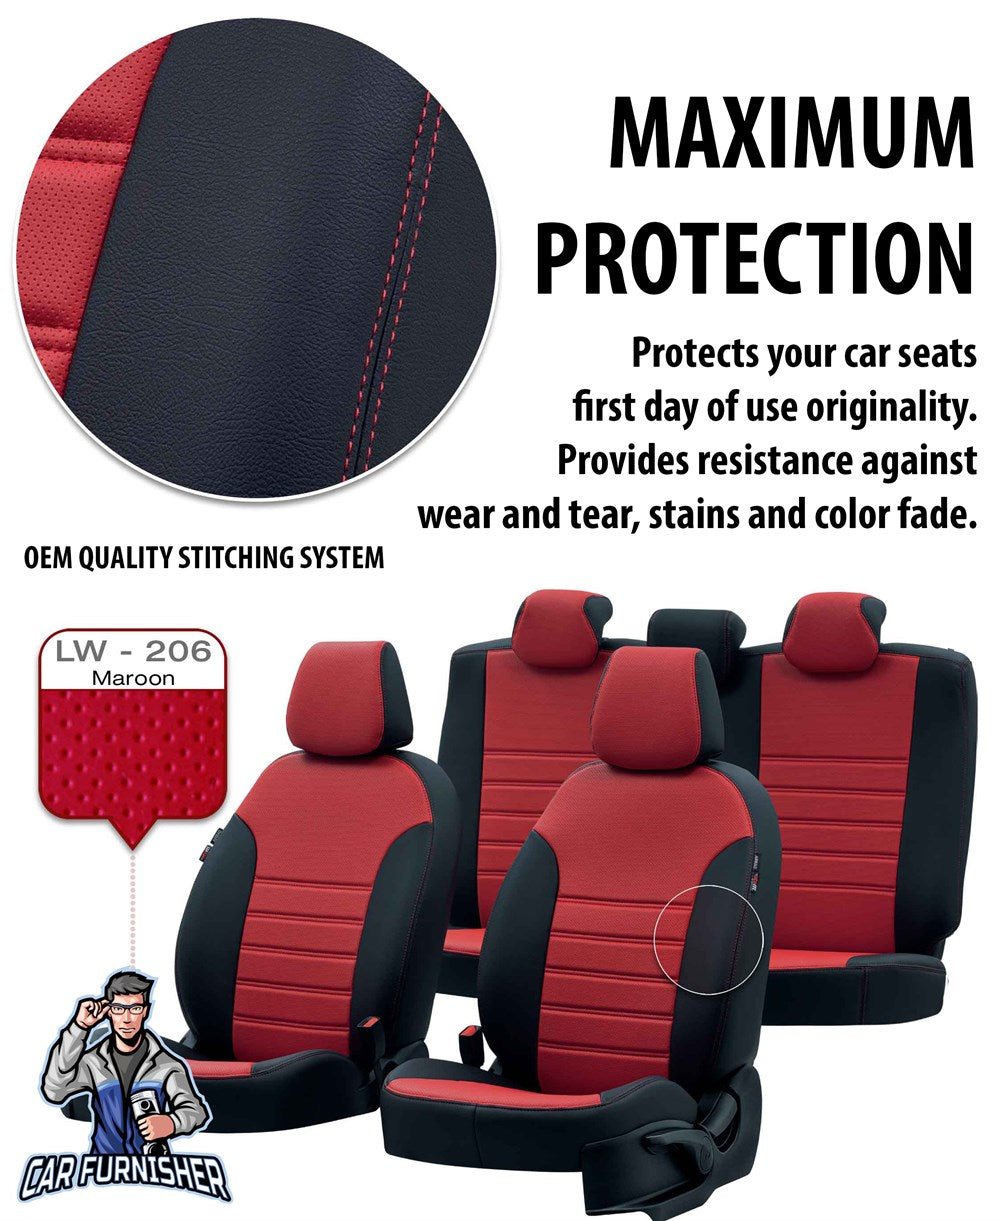 Mini Countryman Seat Covers Istanbul Leather Design Black Leather